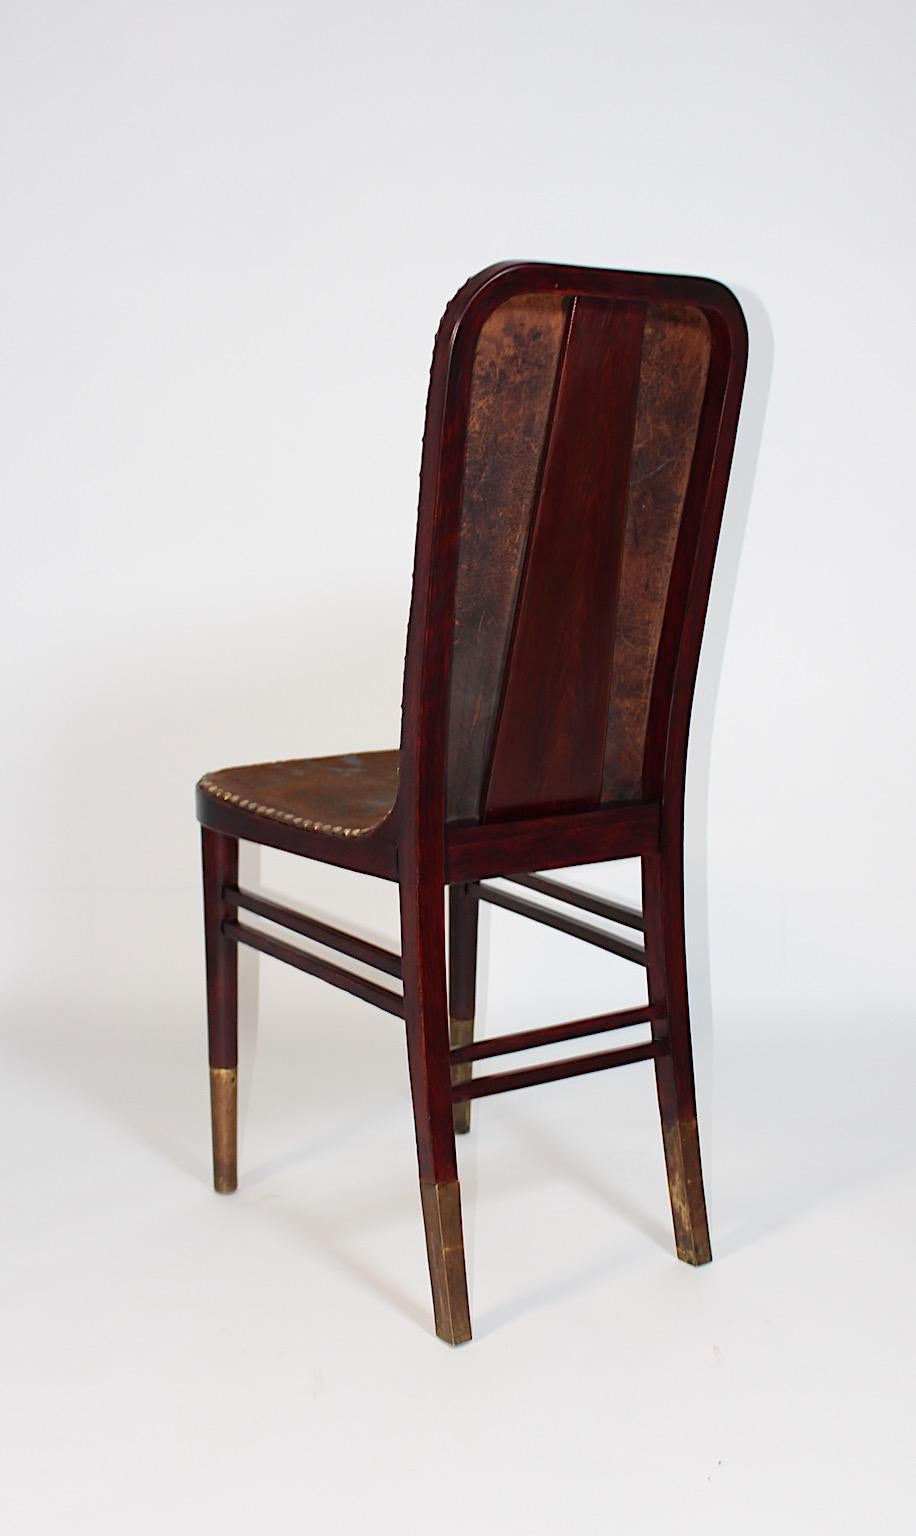 Jugendstil Side Chair Beech Leather by Joseph Urban Gebrüder Thonet 1903 Vienna For Sale 4